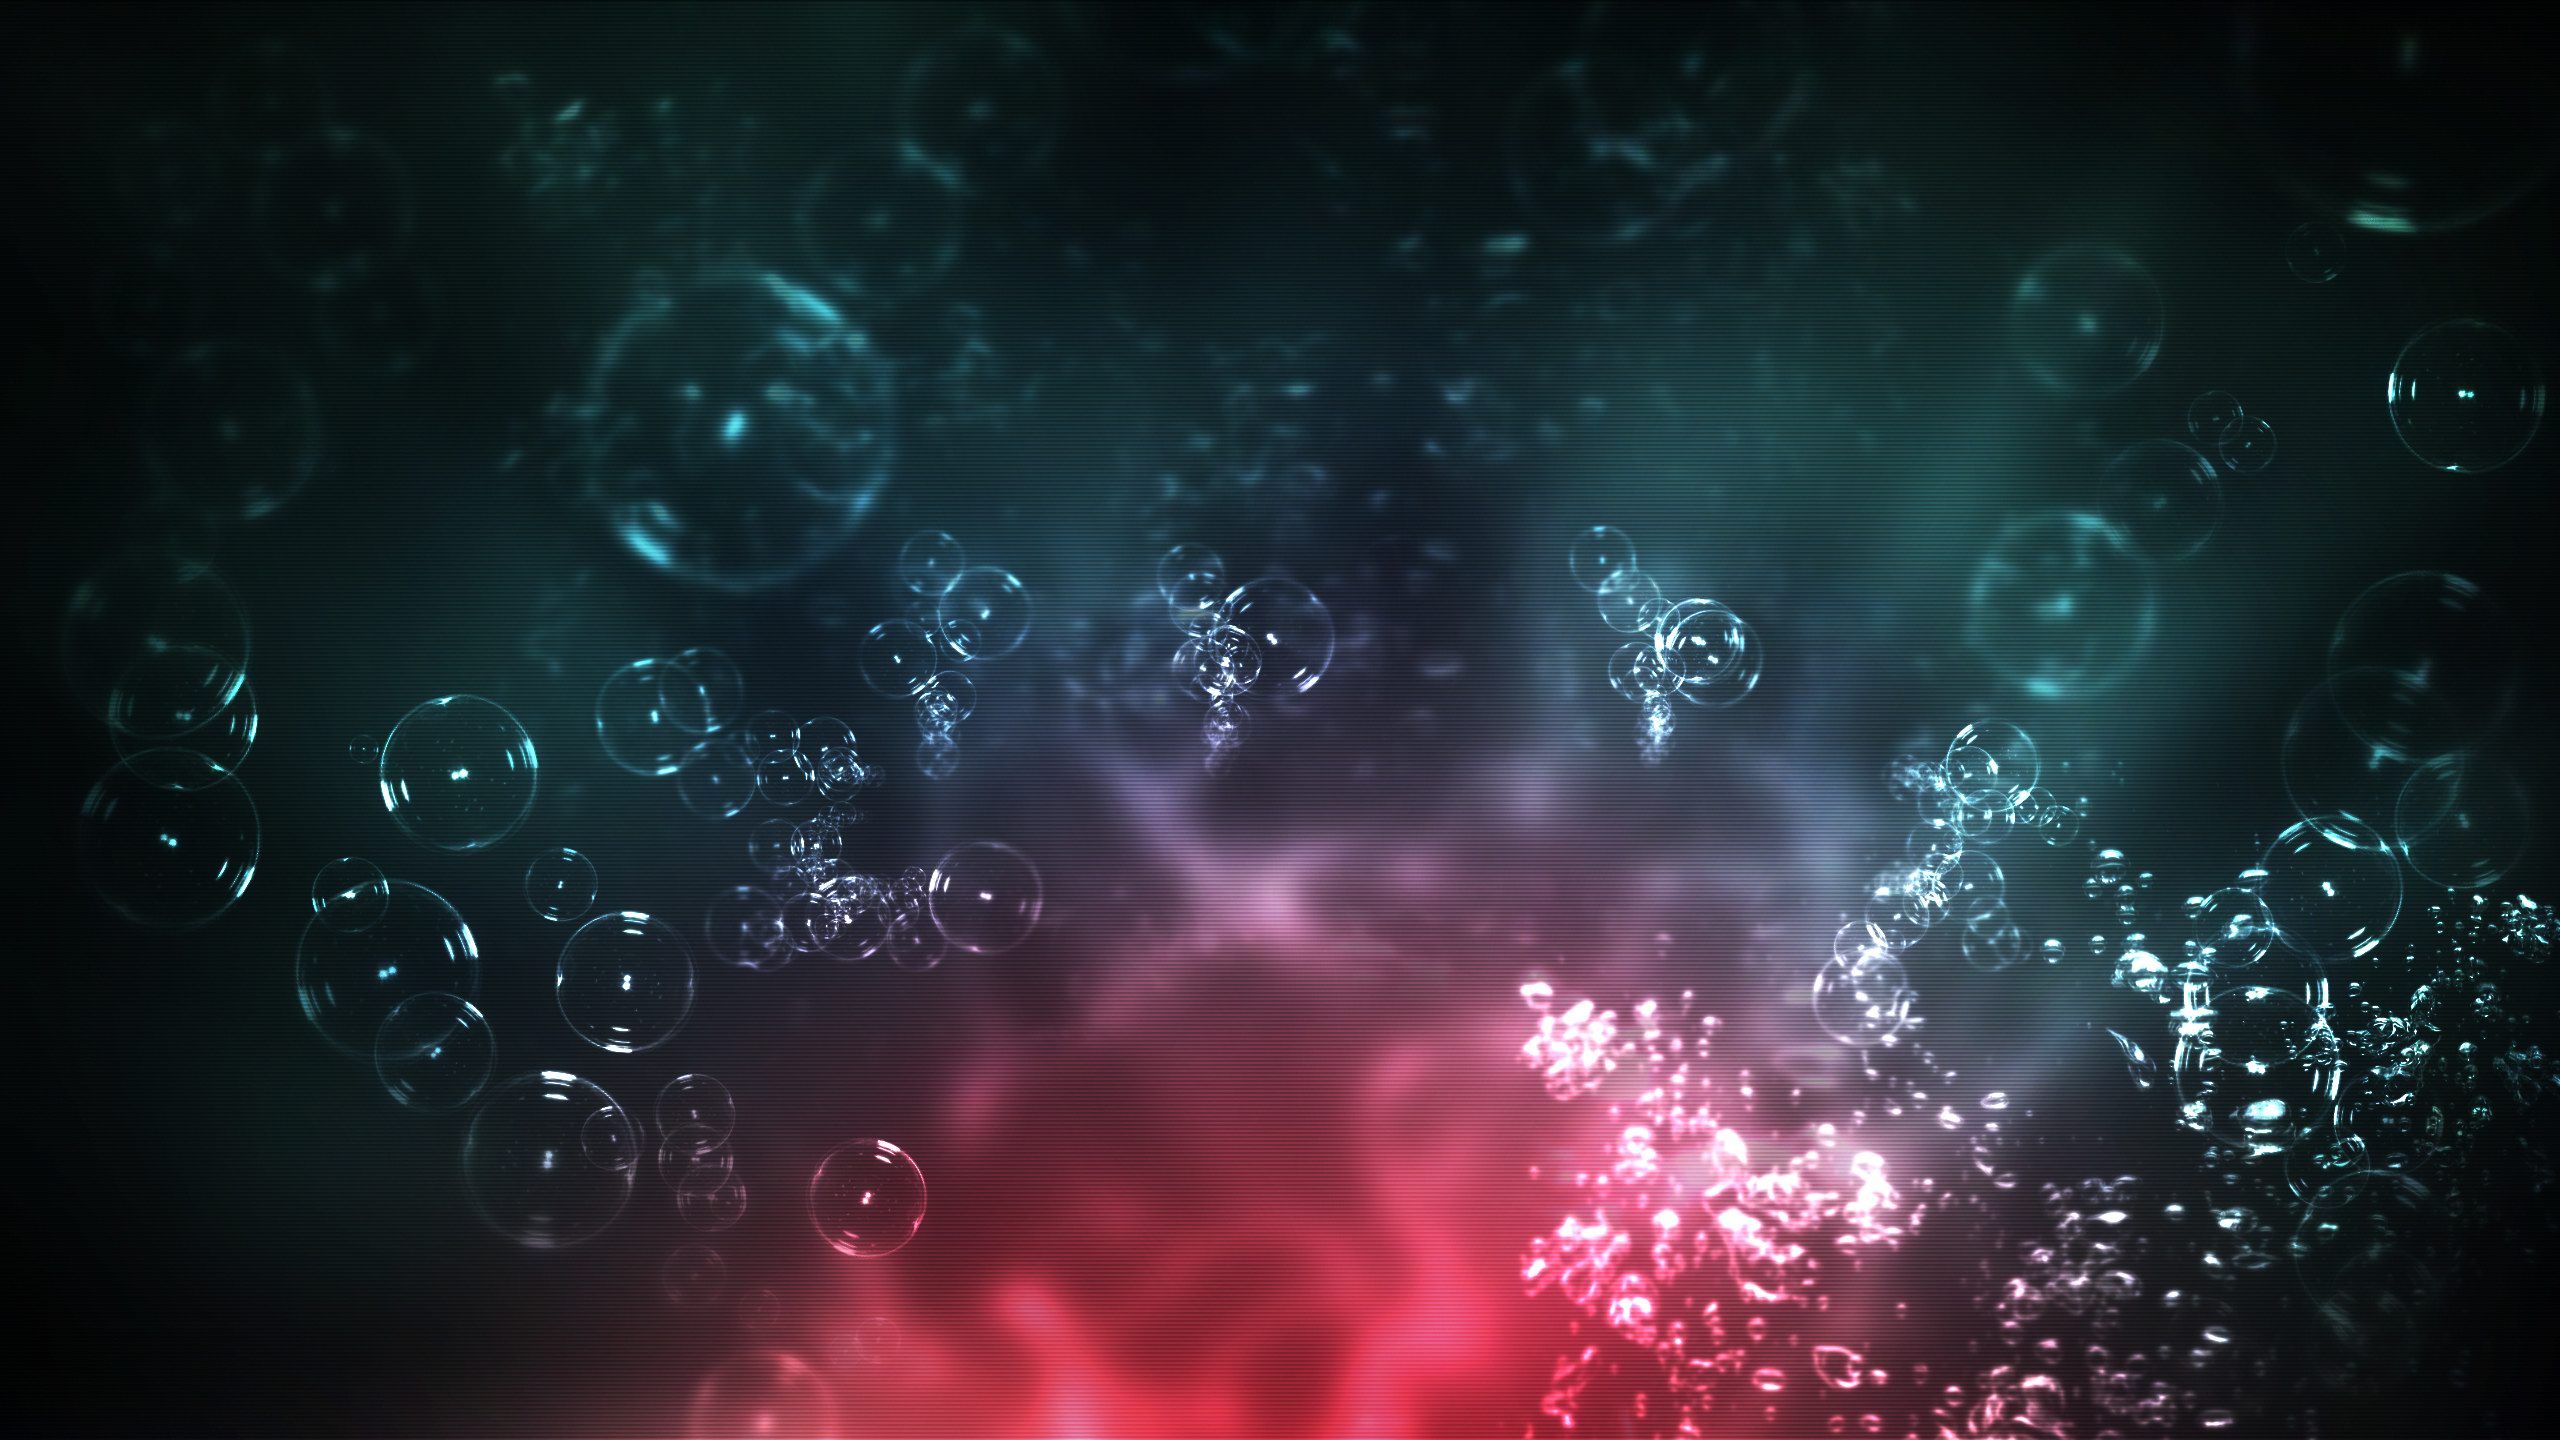 HD wallpaper, Bubbles, Abstract